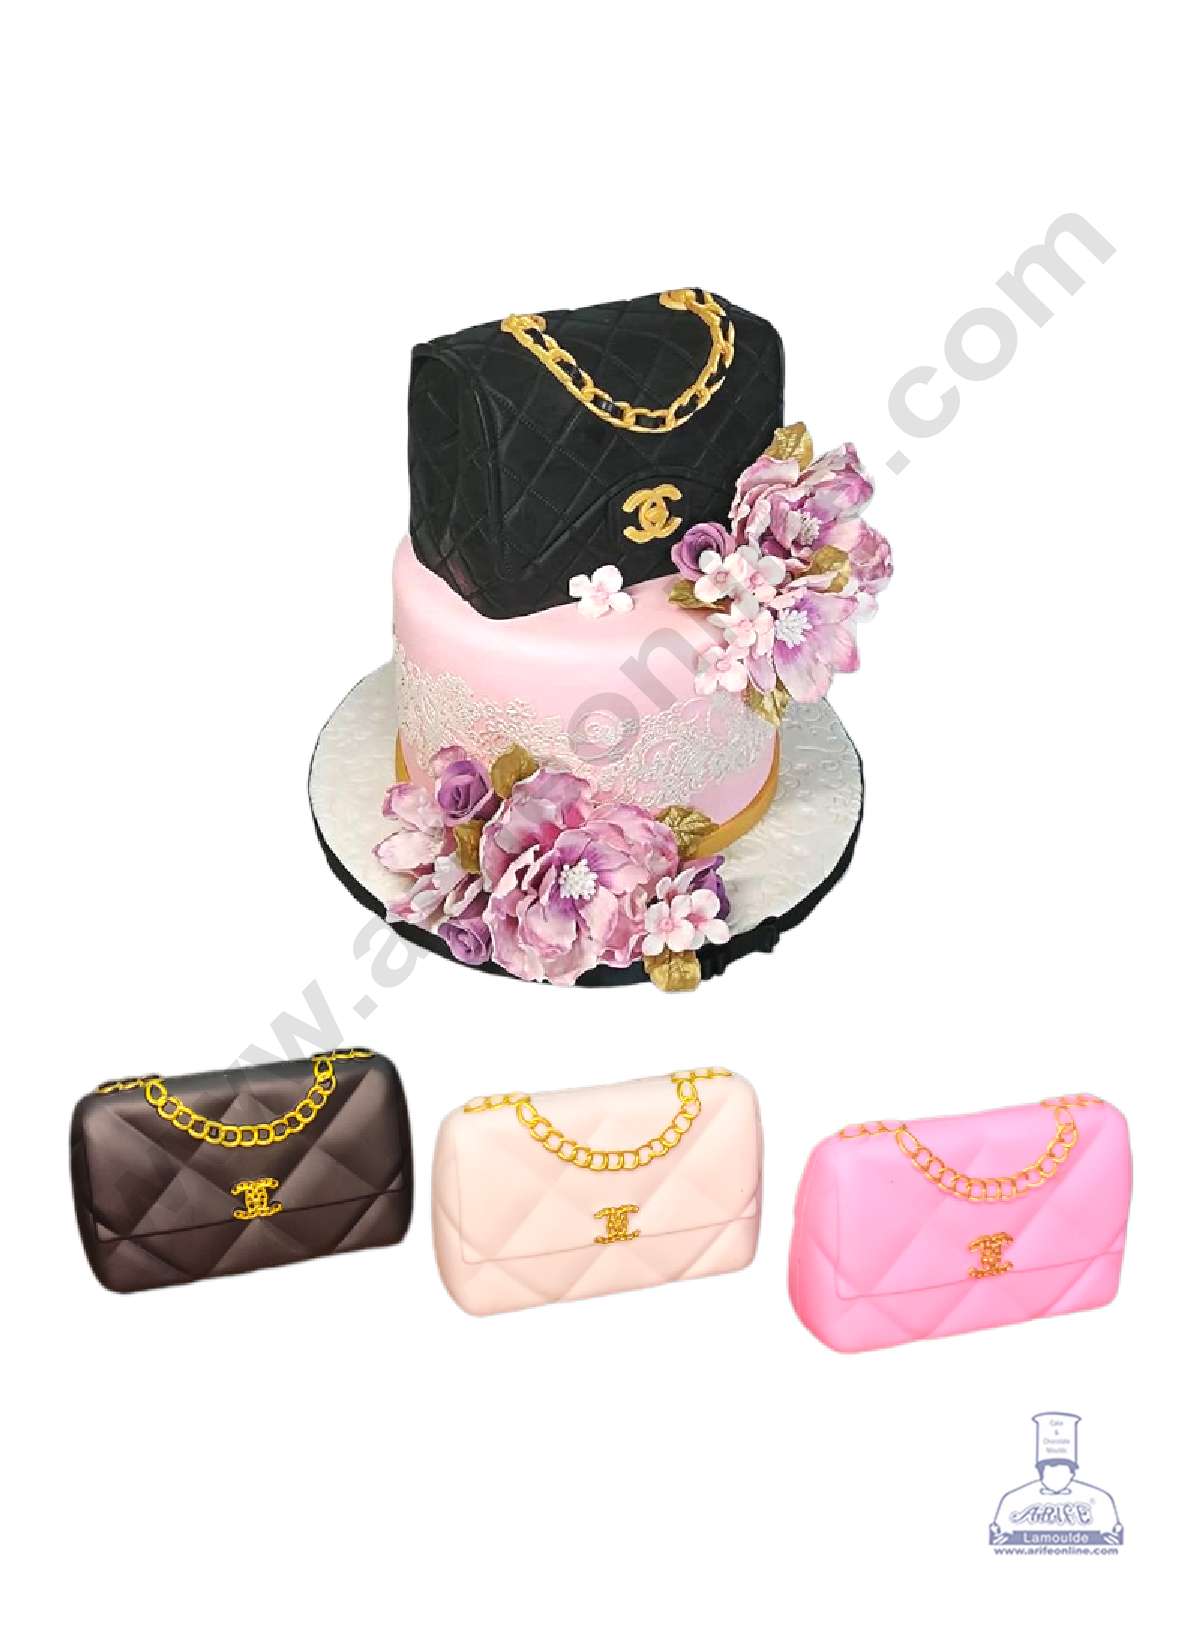 Sublime Cake Design - Chanel purse cake! | Facebook